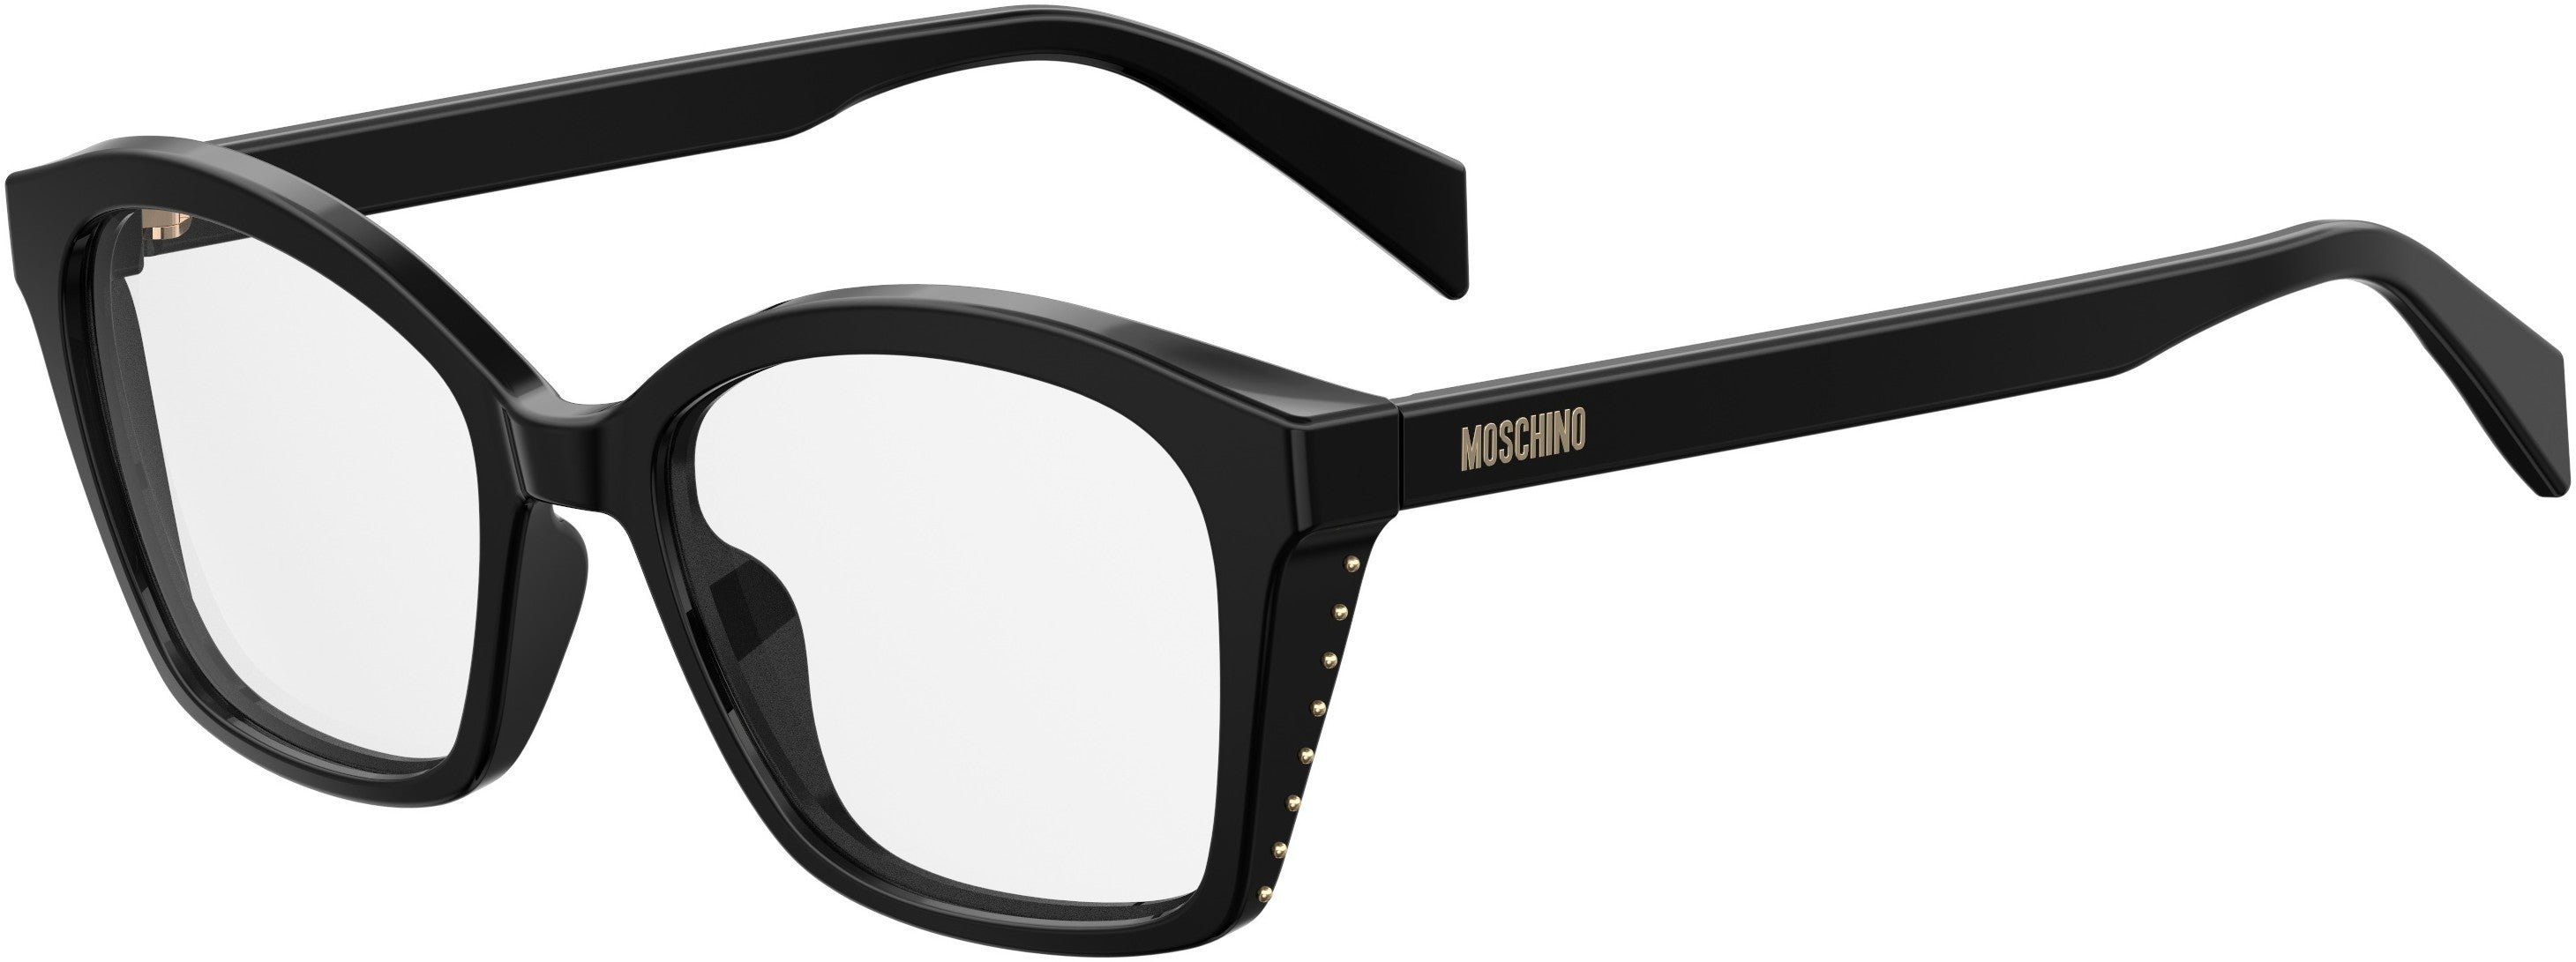  Moschino 517 Square Eyeglasses 0807-0807  Black (00 Demo Lens)